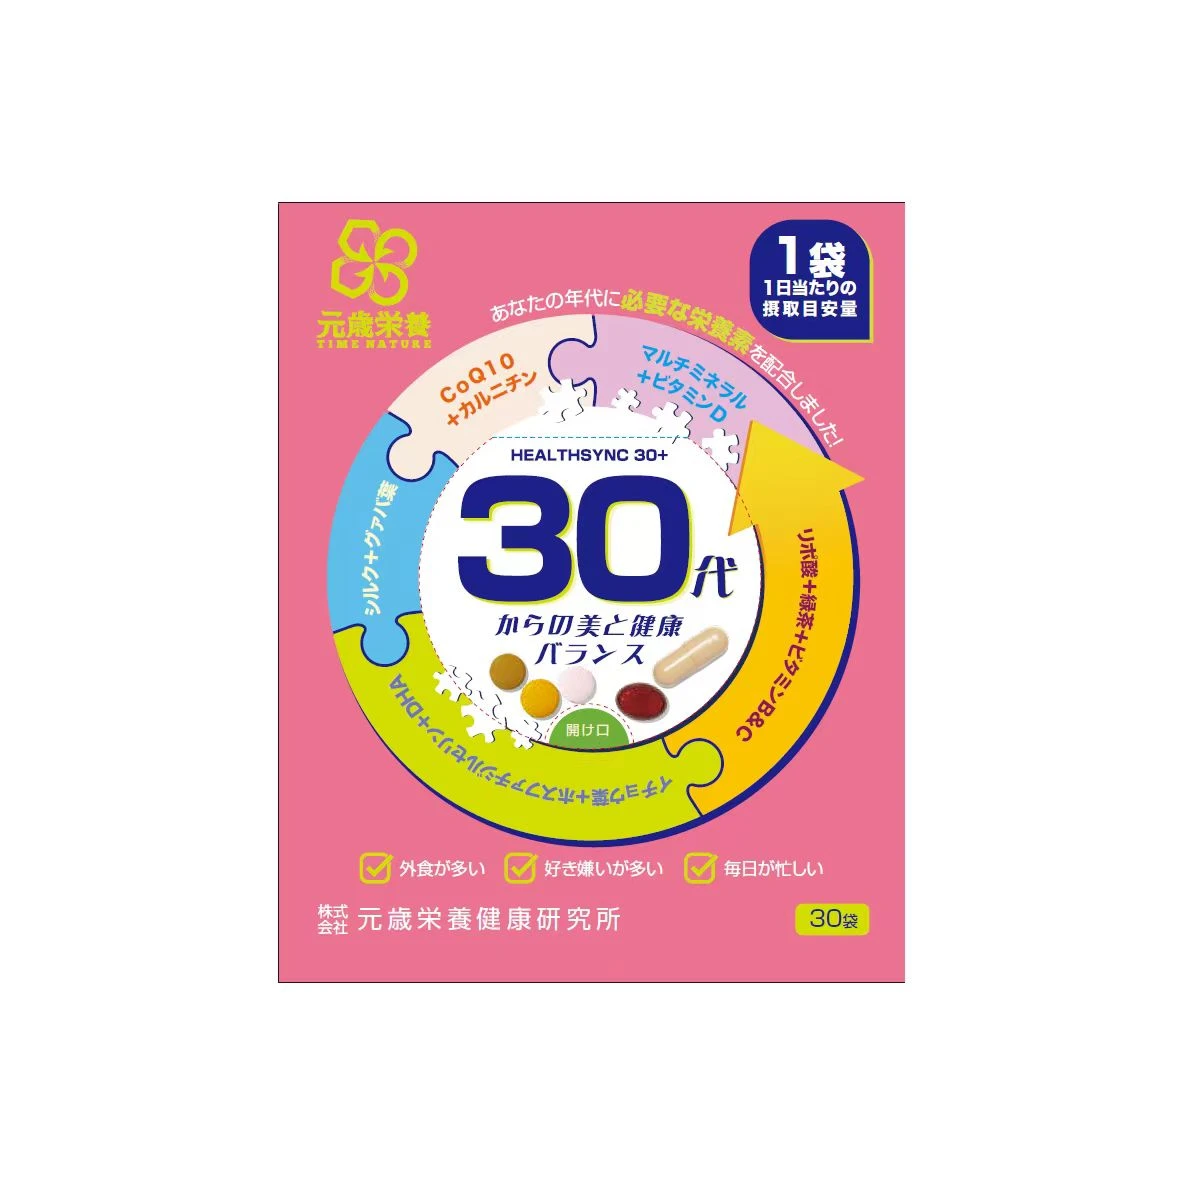 TIME NATURE | 元岁荣养 30代美丽健康营养包 30包,商家Sourcing Plus Intl,价格¥380